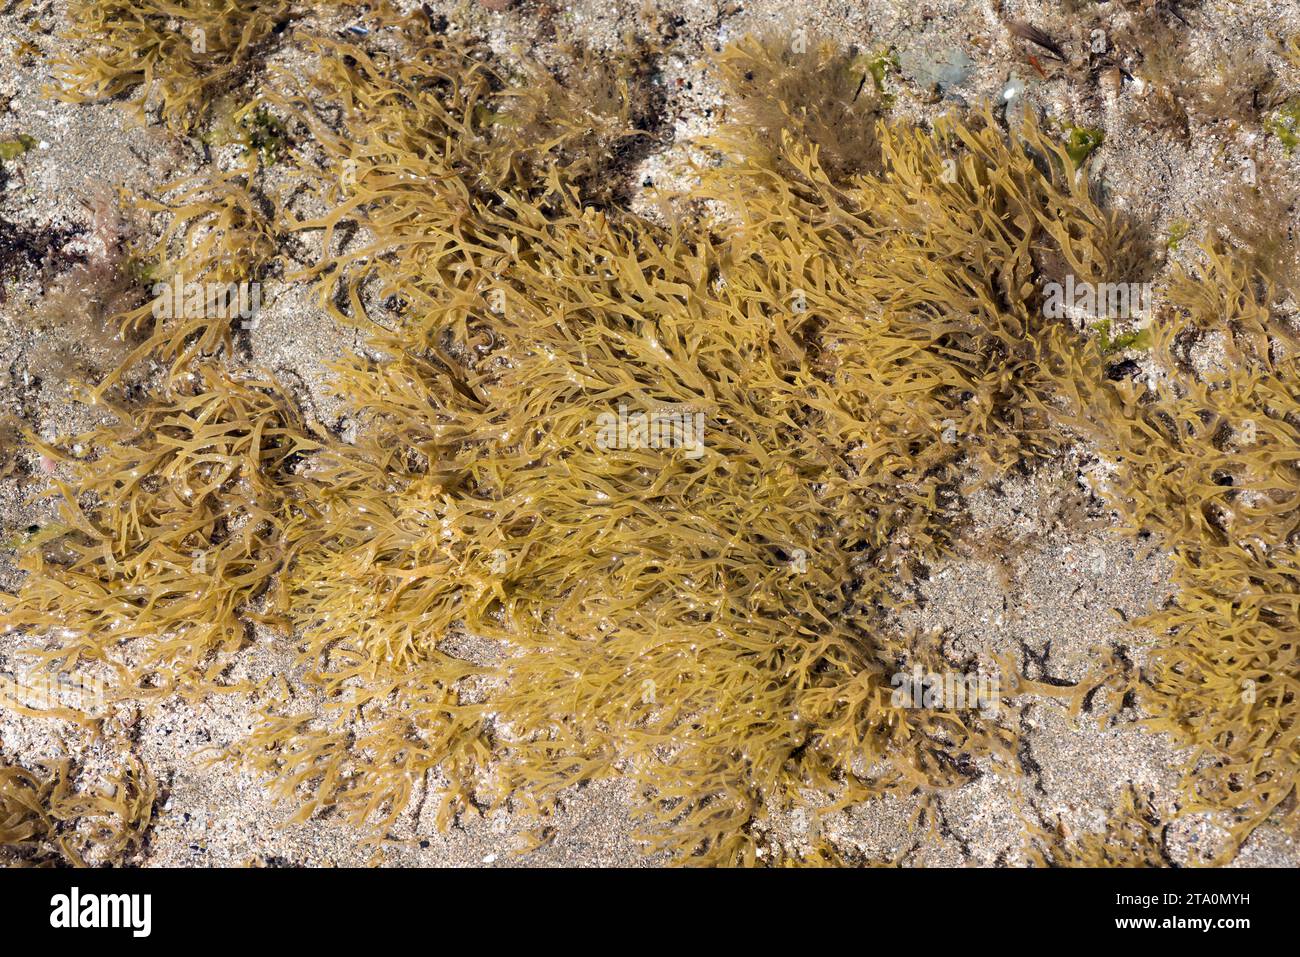 Dilophus fasciola or Dictyota fasciola is a brown alga. This photo was taken in Cap Ras coast, Girona province, Catalonia, Spain. Stock Photo